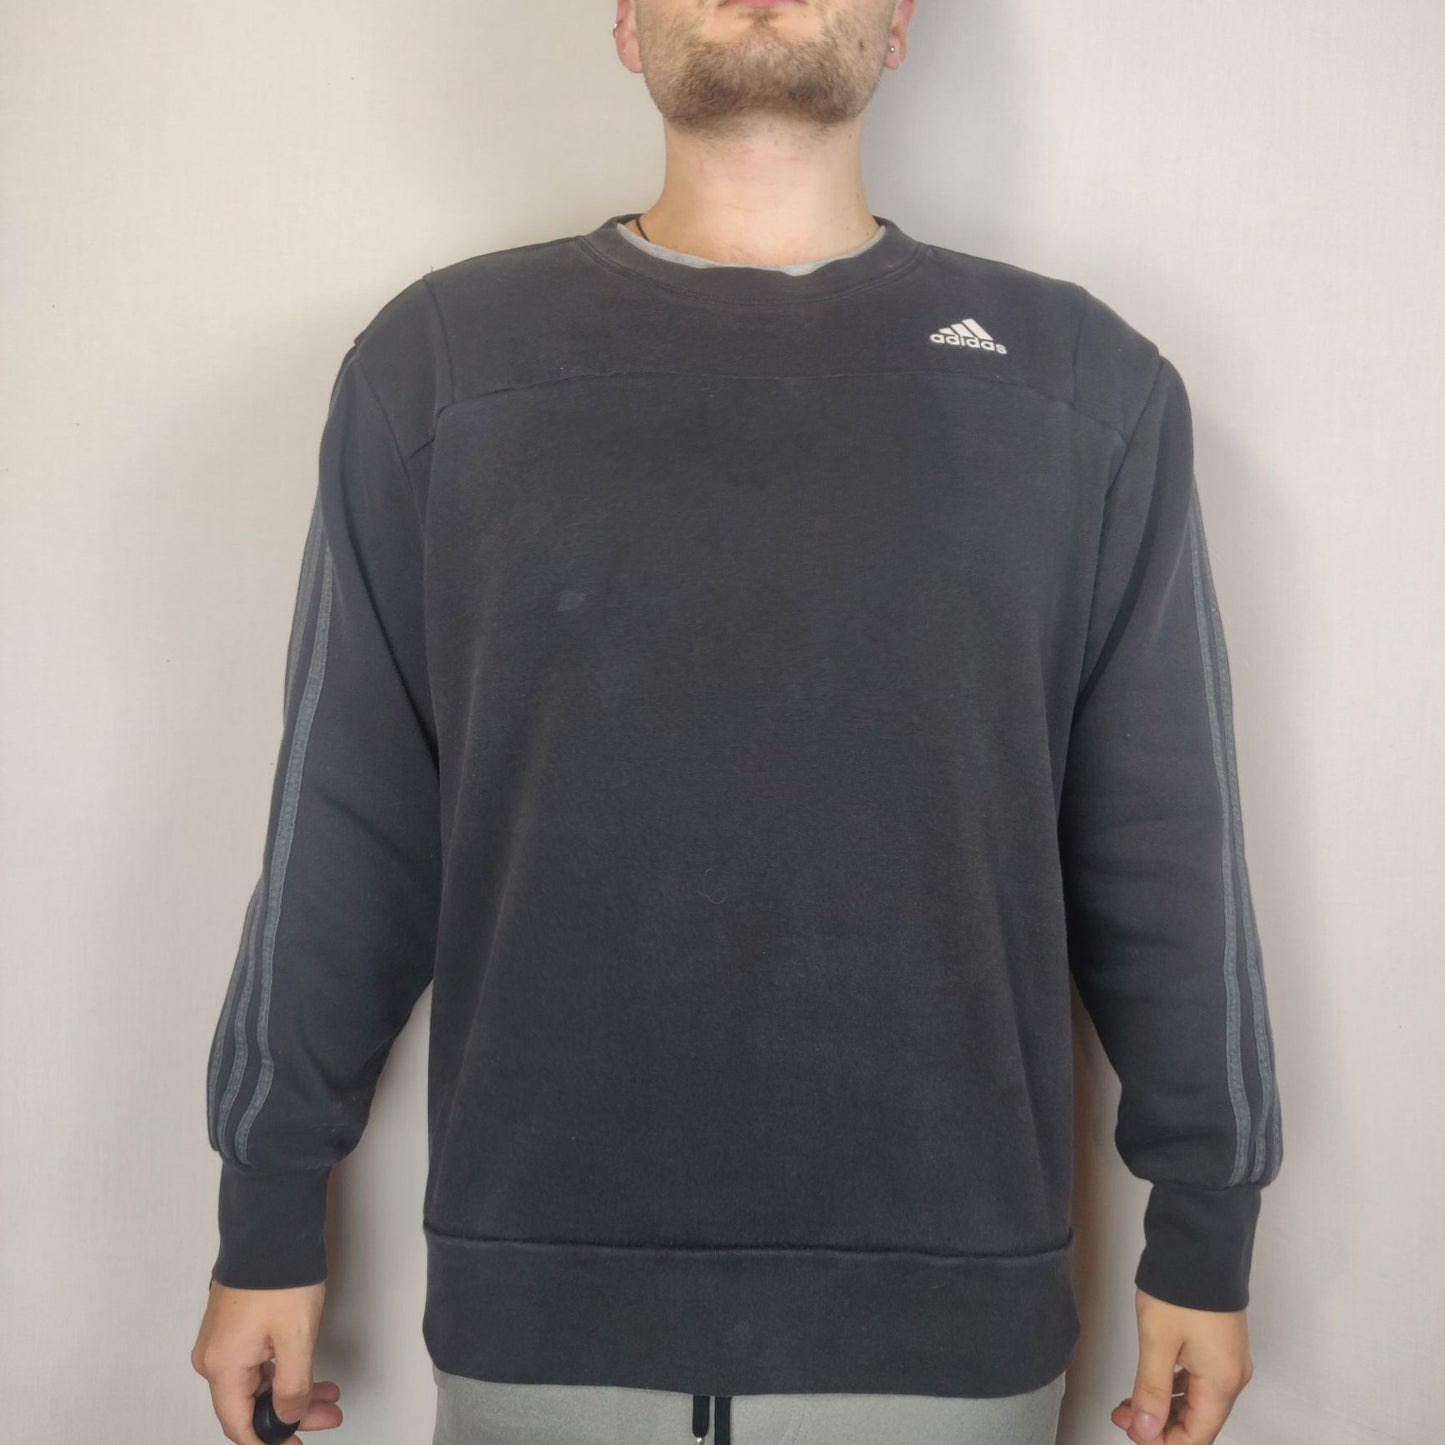 Adidas Black Sweatshirt Pullover Long Sleeve Men Size Large